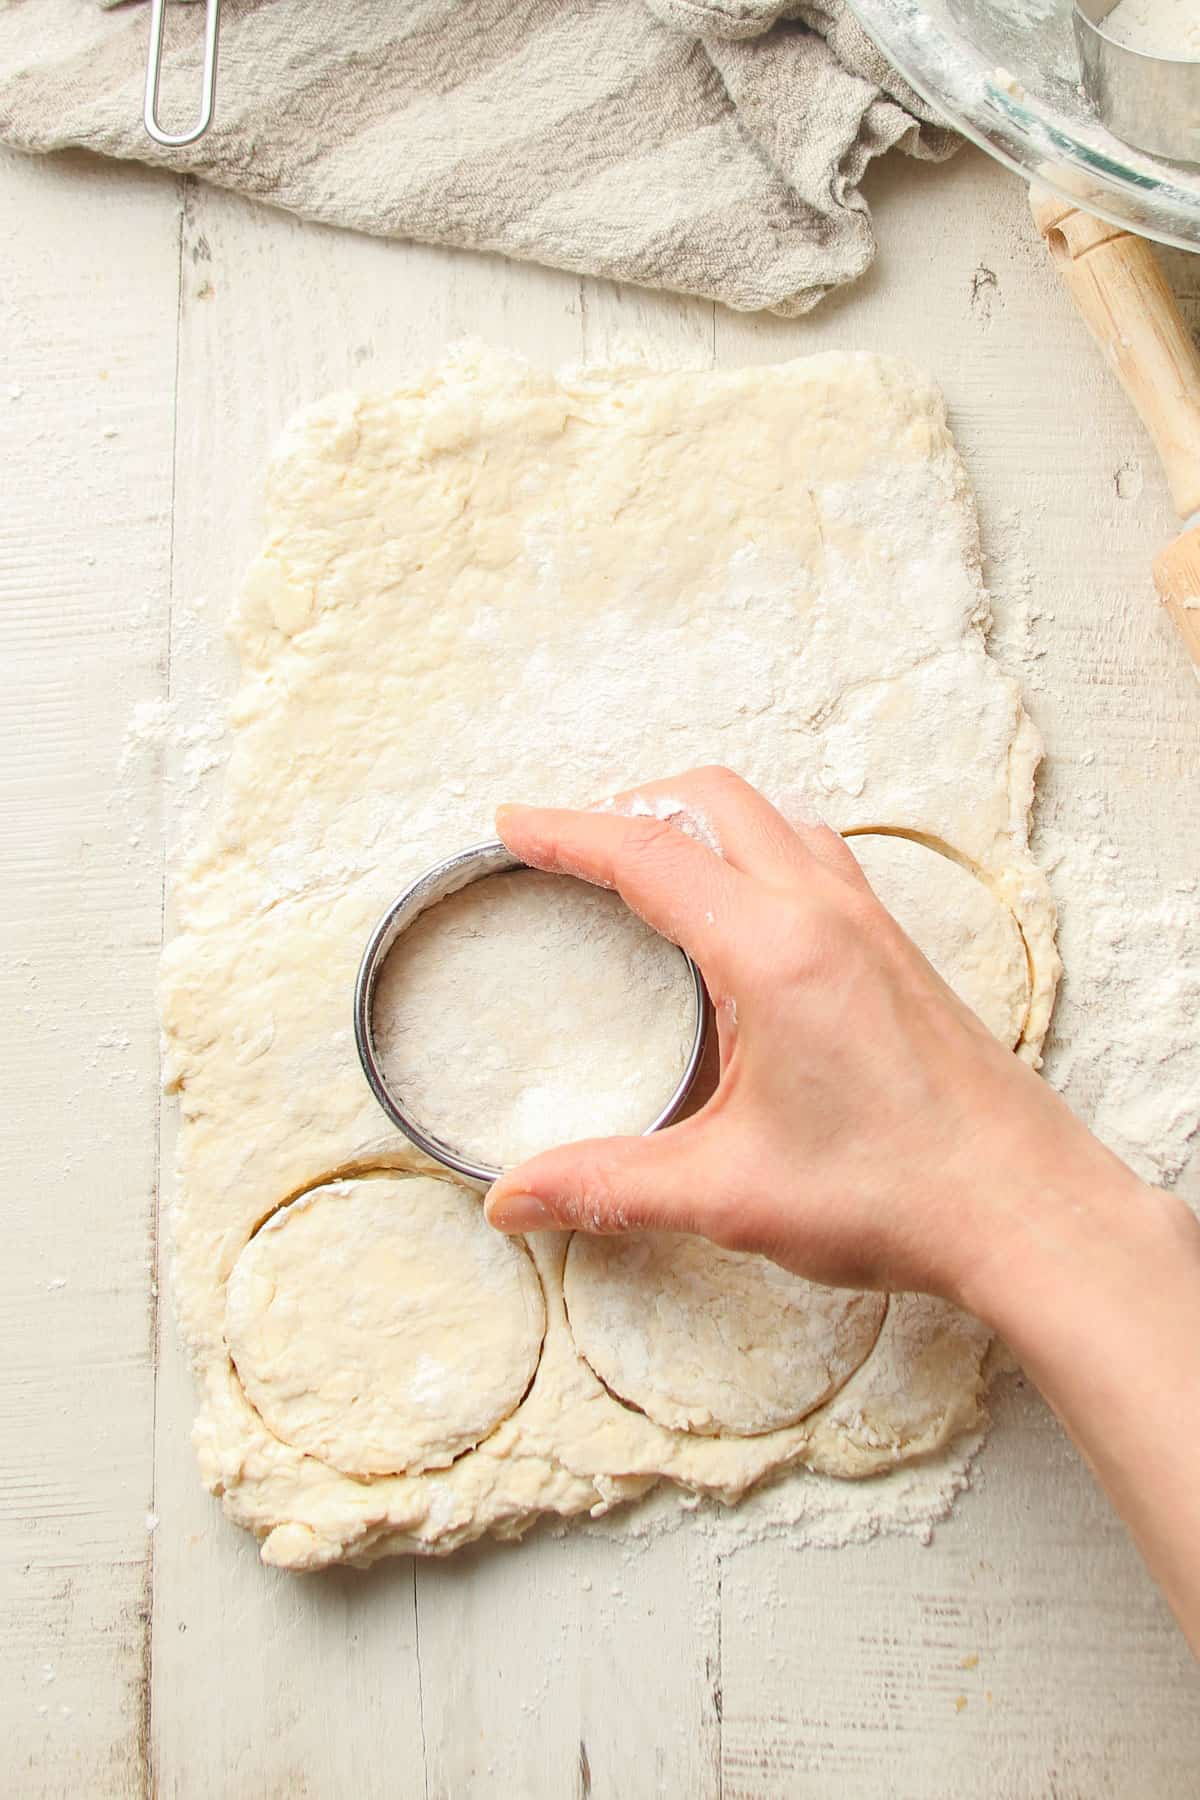 Hand cutting biscuits in dough using a biscuit cutter.